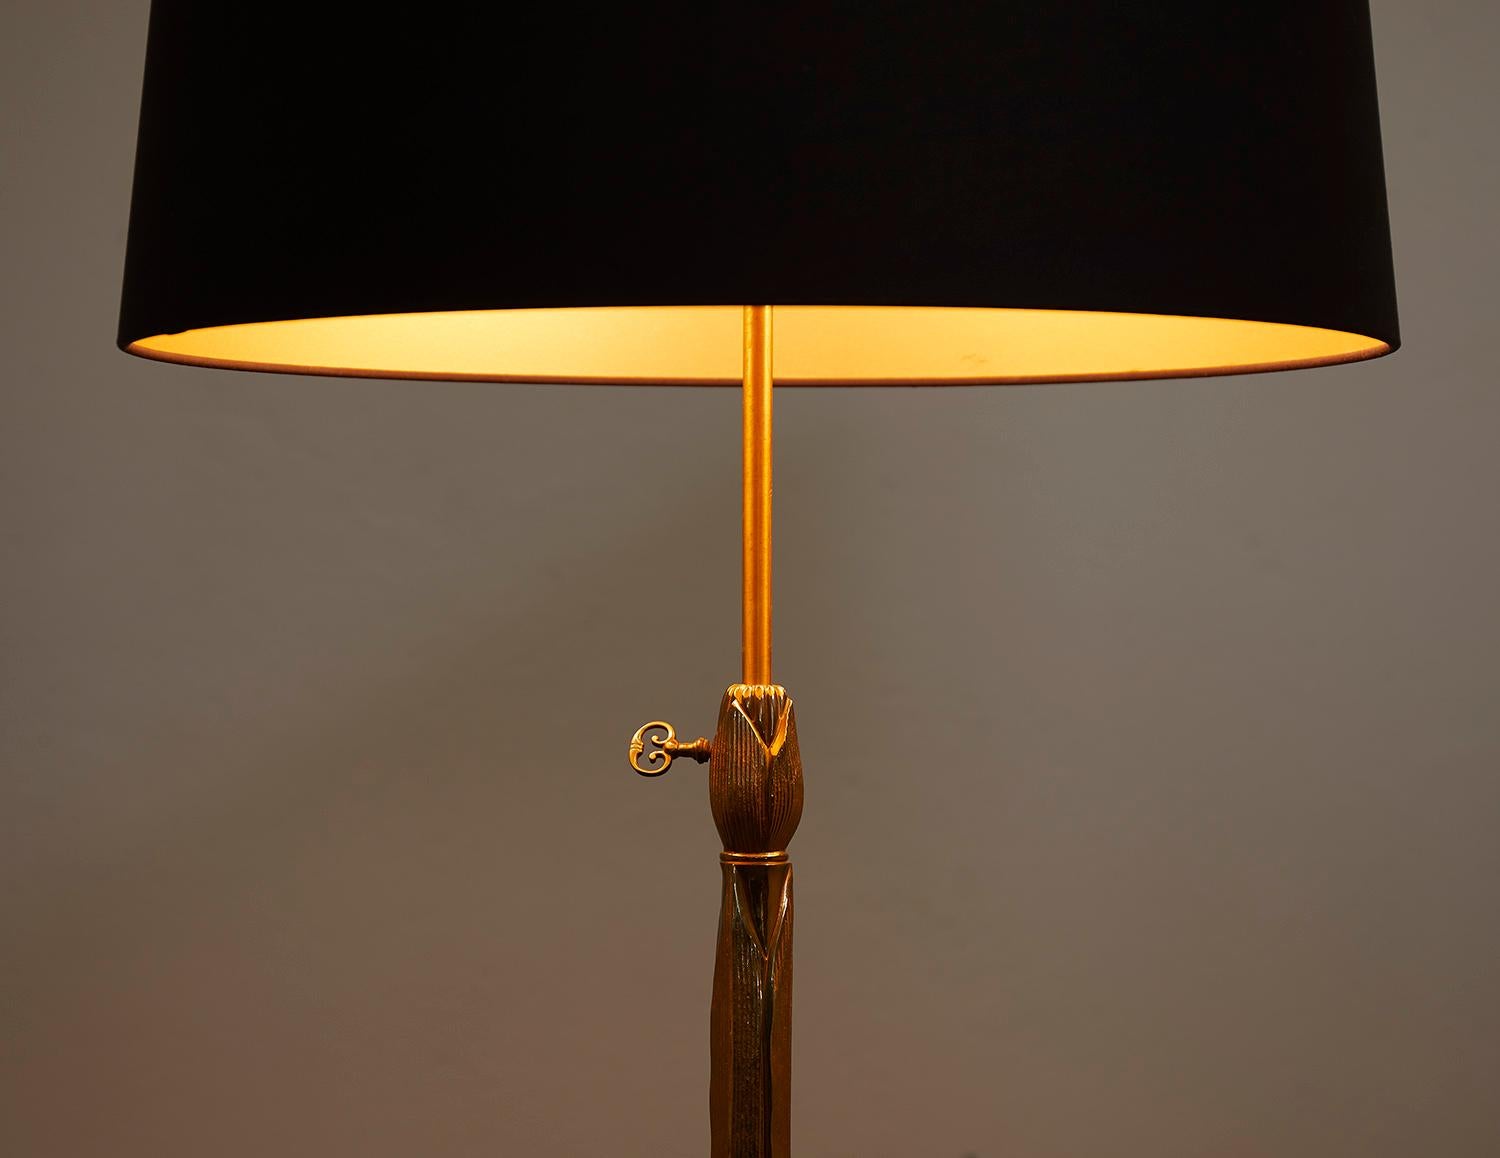 Cast bronze floor lamp by Maison Charles model 